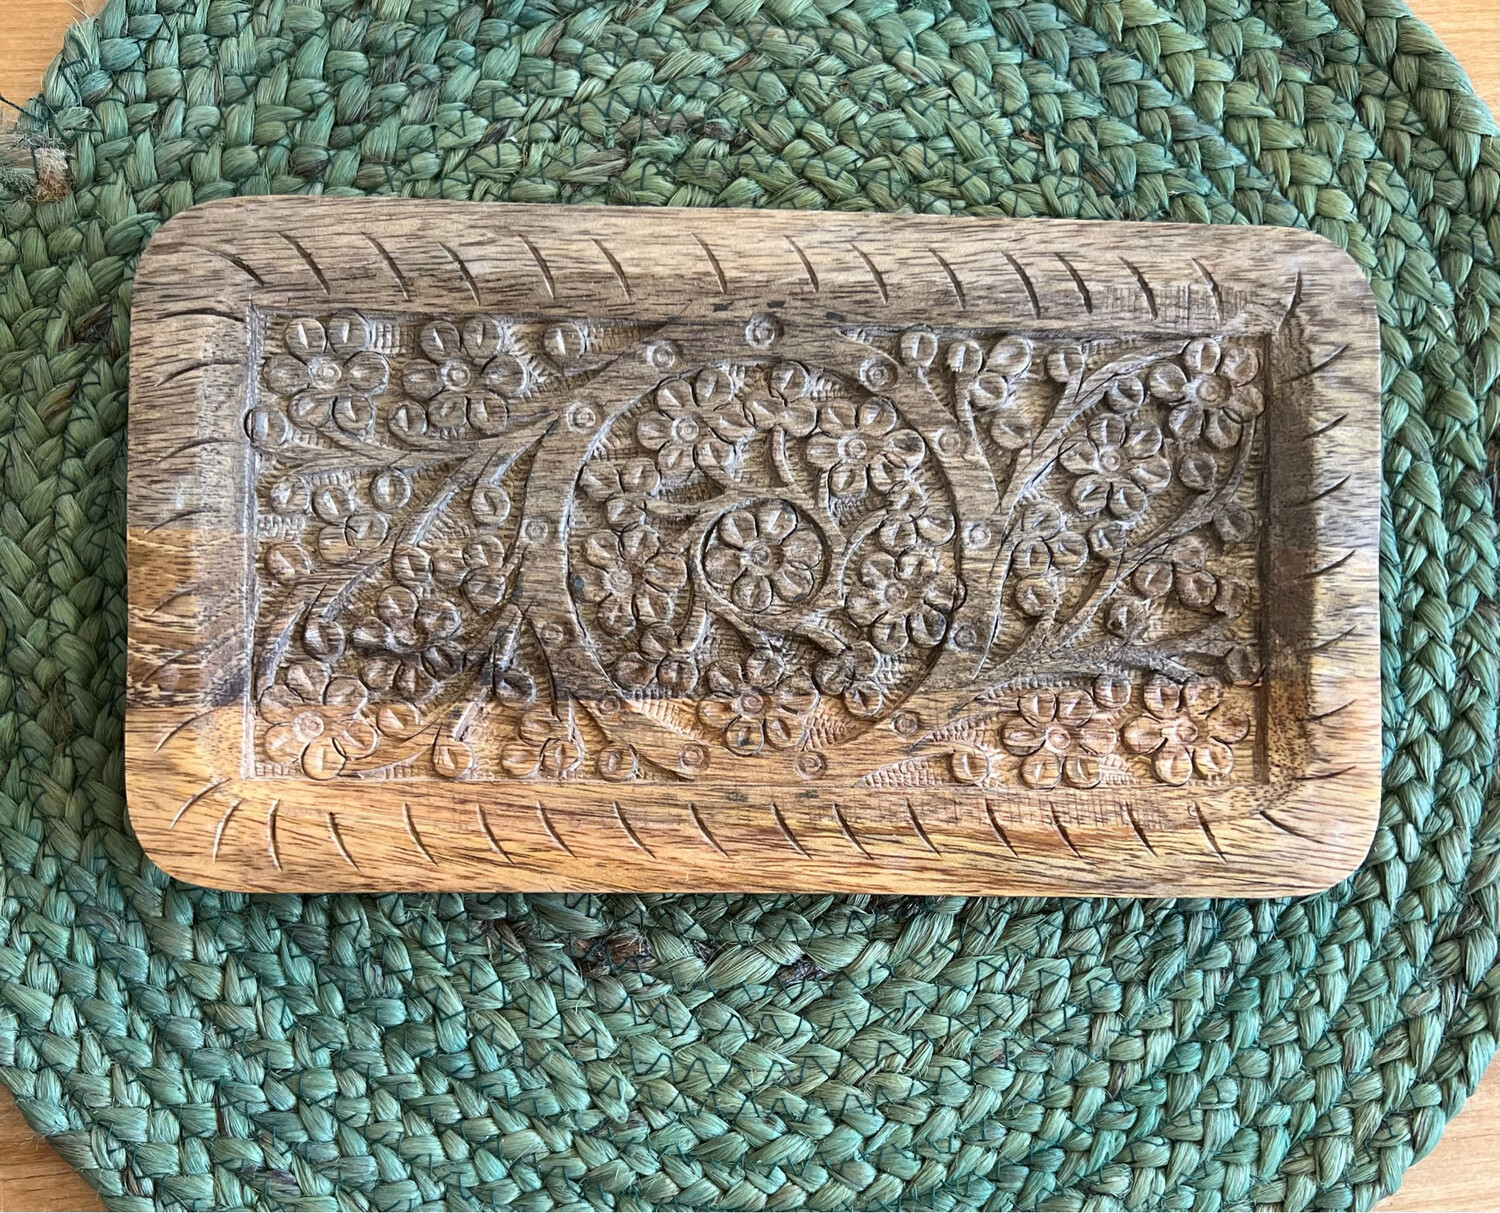 10" x 6" Mango Carved Tray